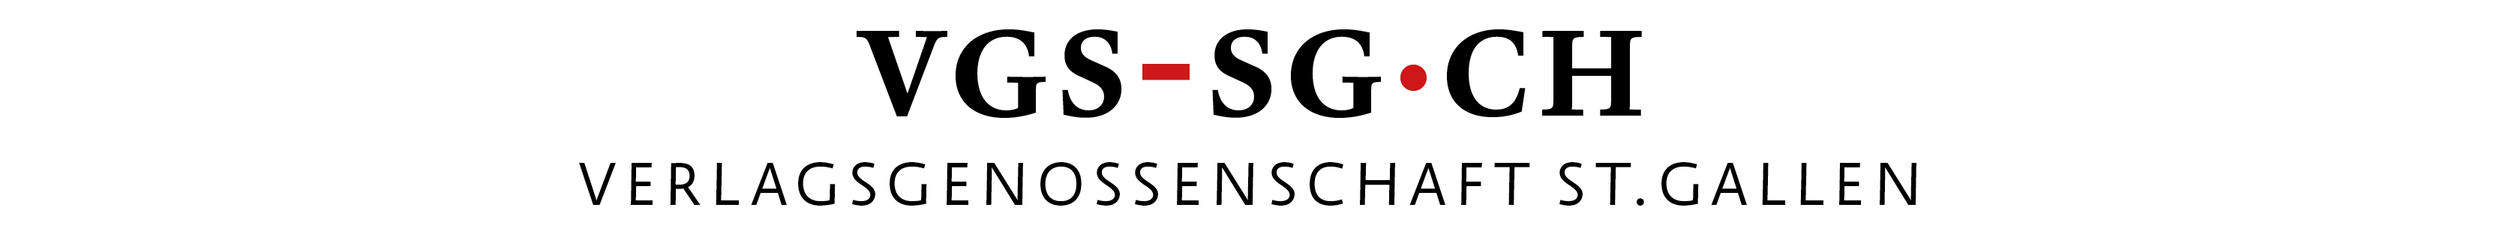 VGS Verlagsgenossenschaft St. Gallen